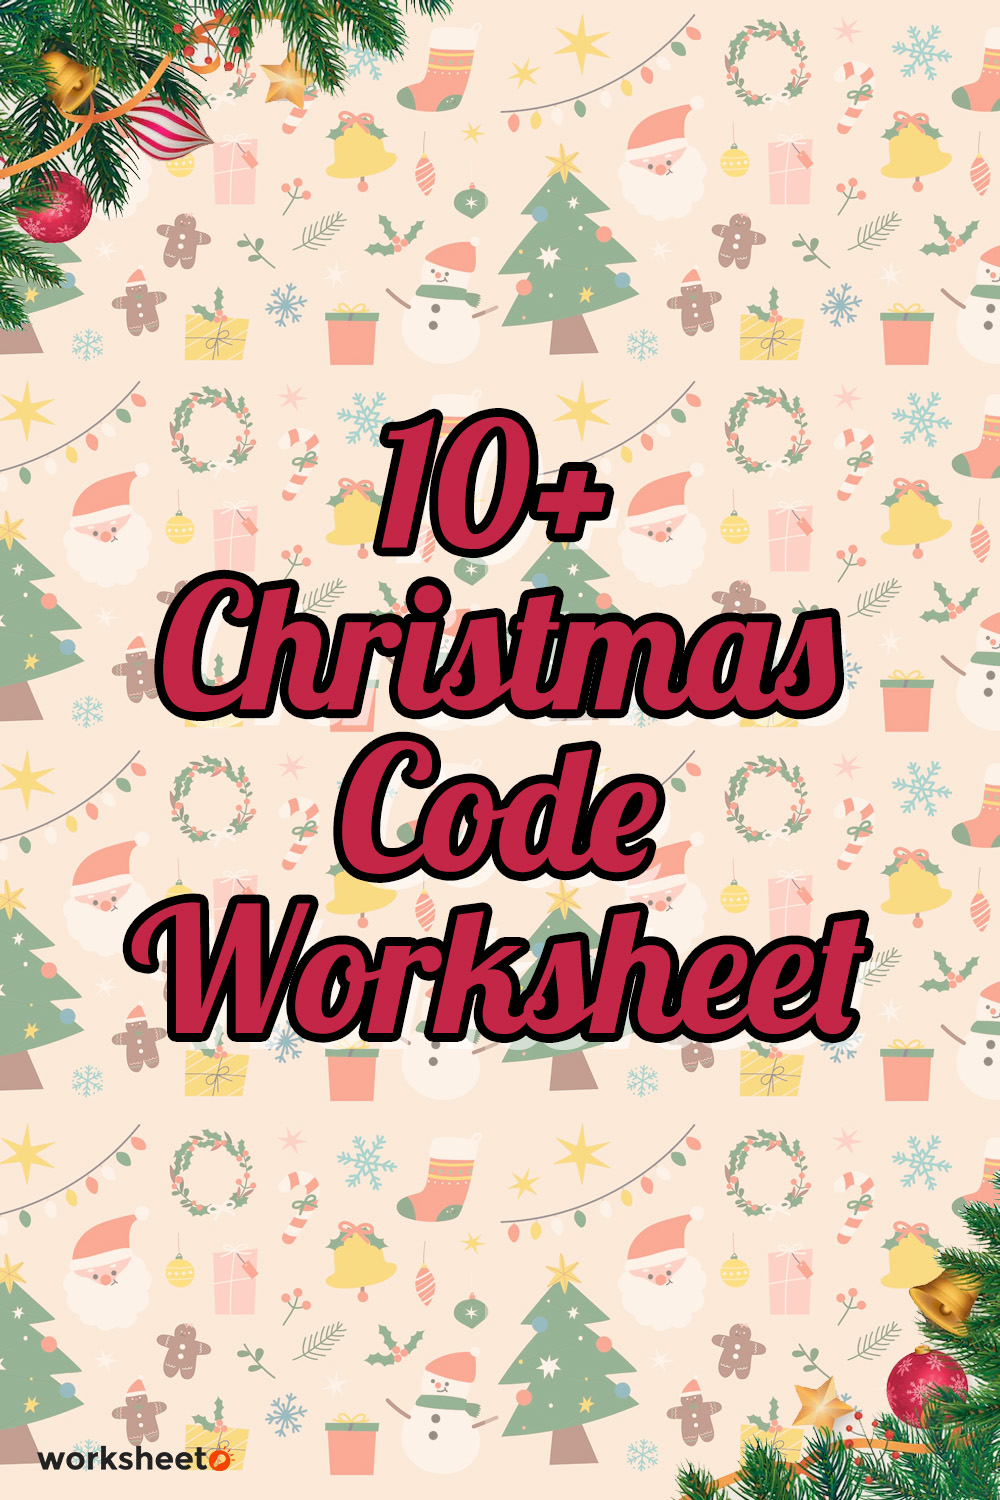 16 Images of Christmas Code Worksheet